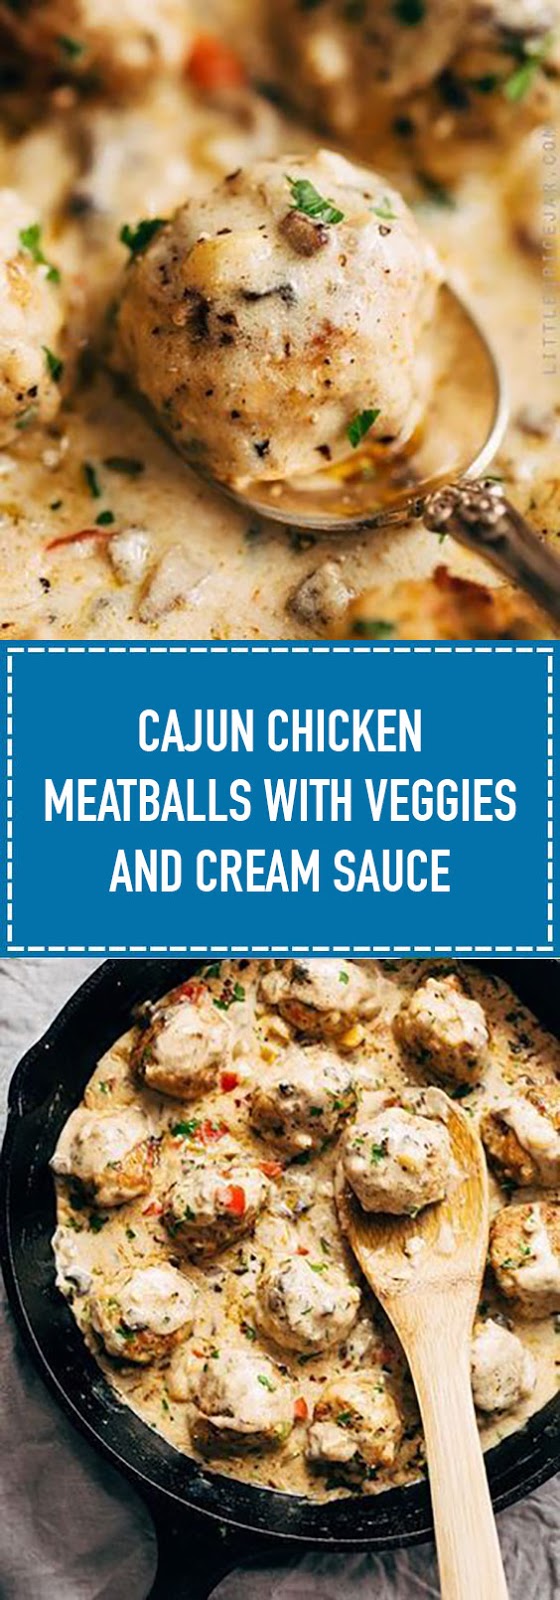 Cajun Chicken Meatballs in a Creamy Sauce